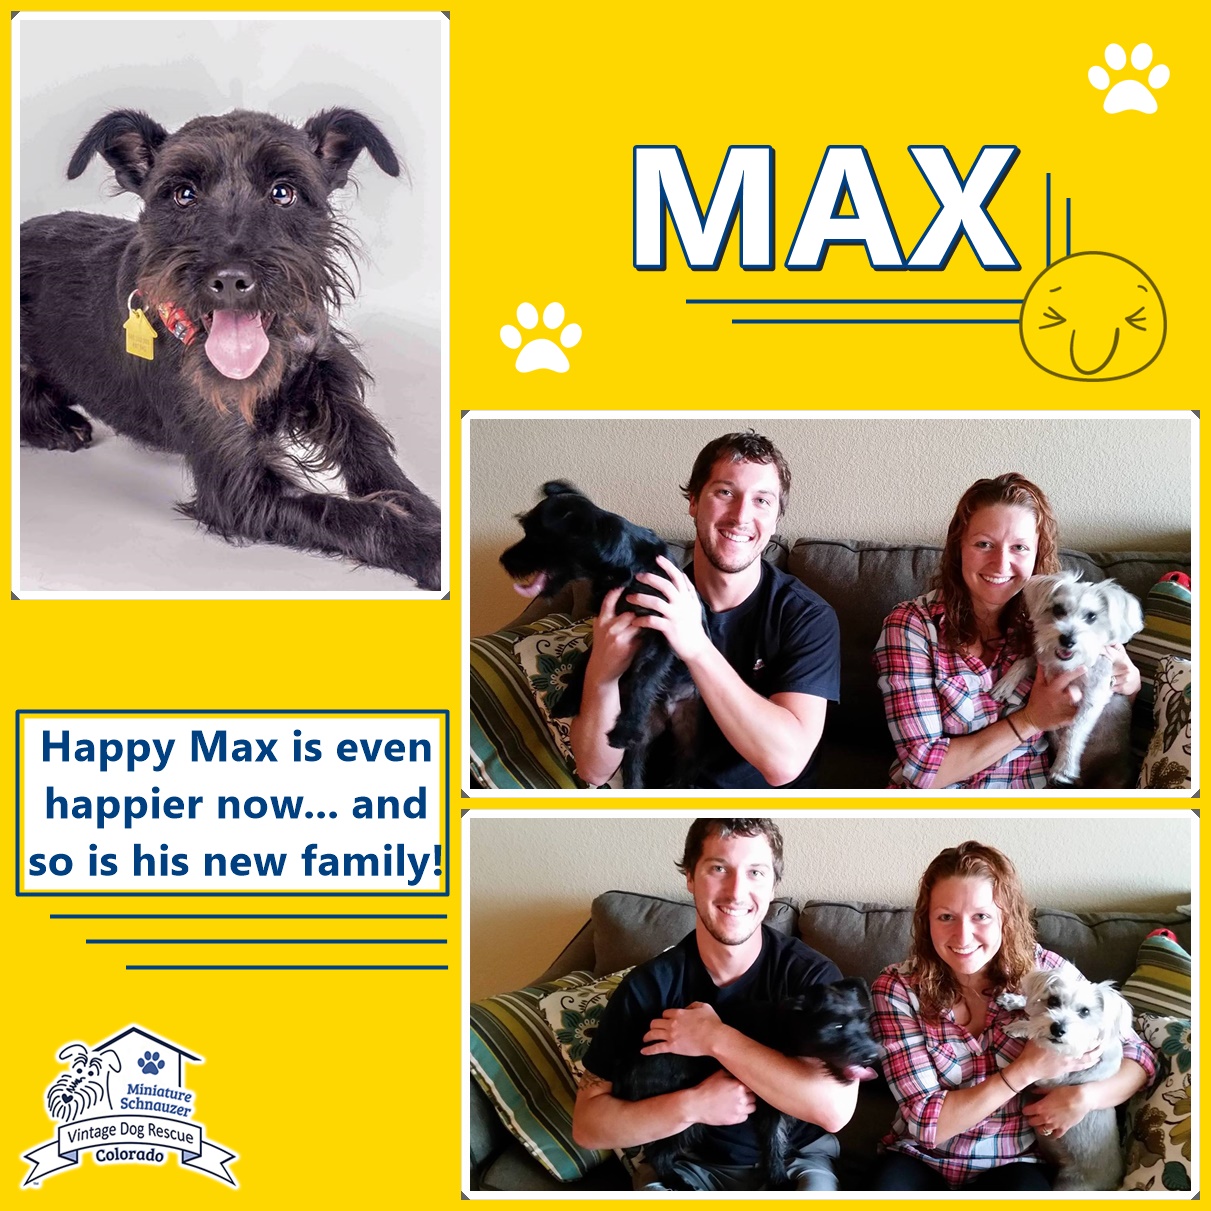 Max (Mini Schnauzer mix) adopted